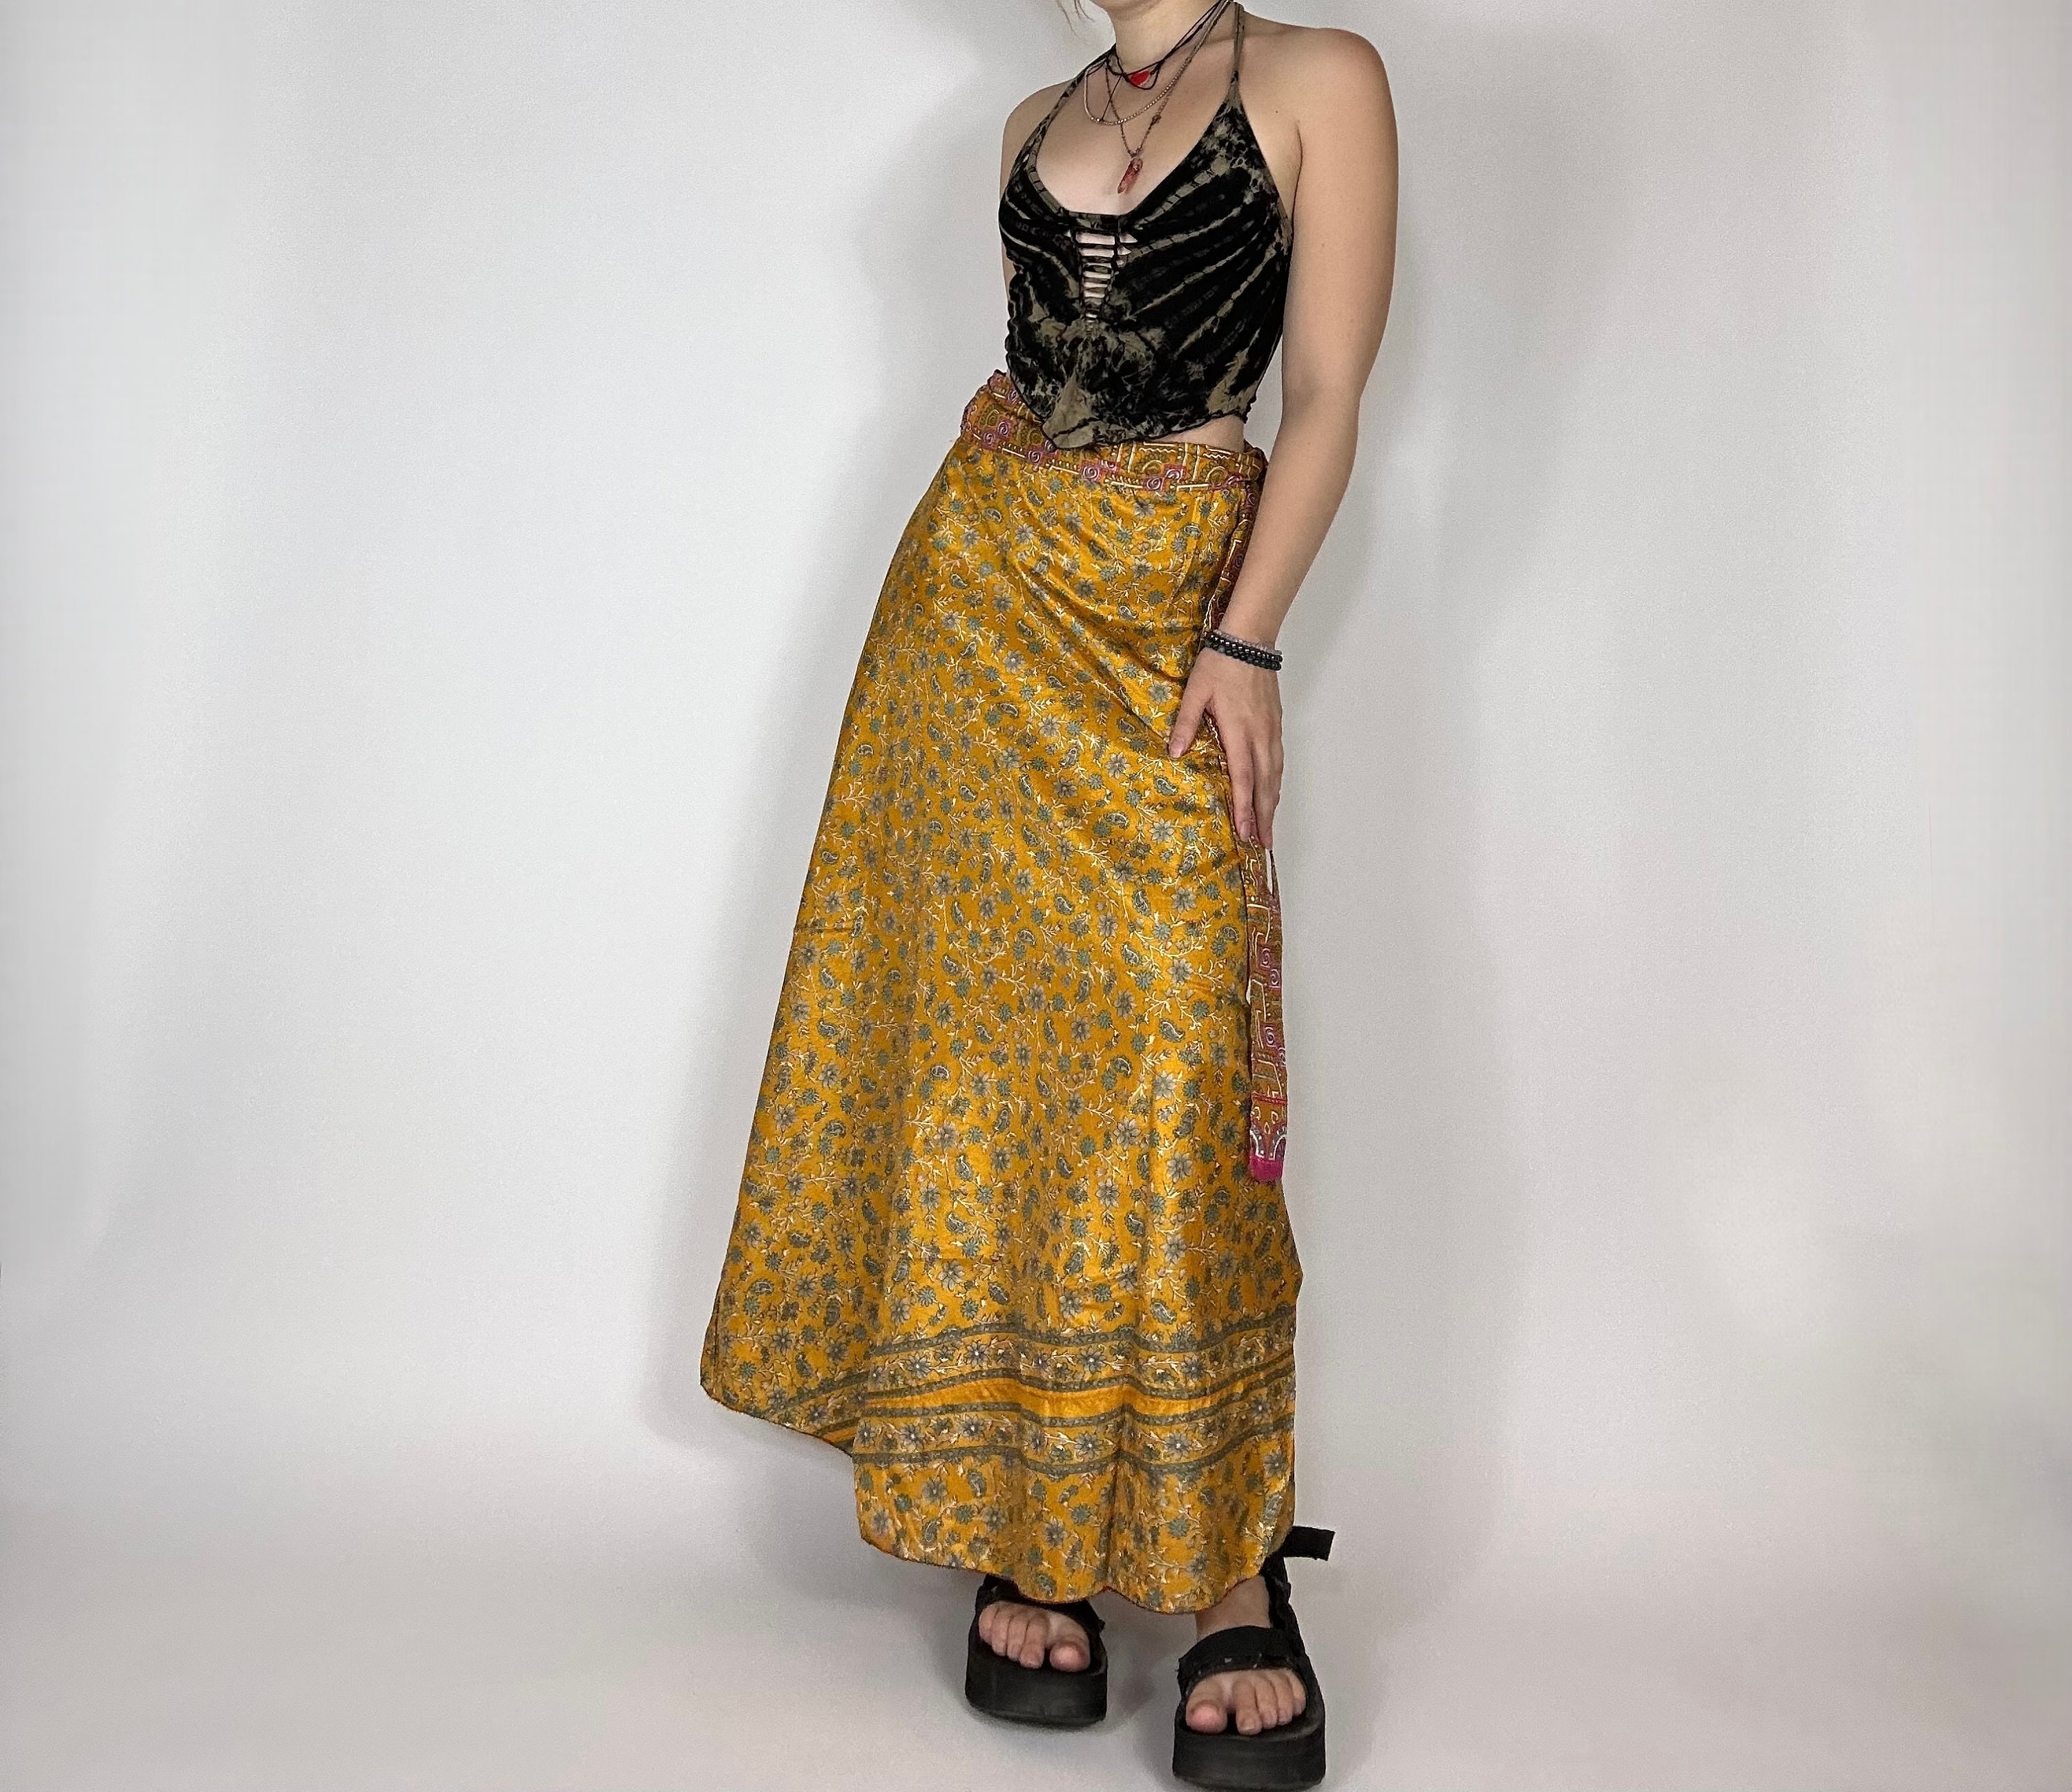 Orange High Waist Maxi Skirt For Womens Birthday Party Fashionable